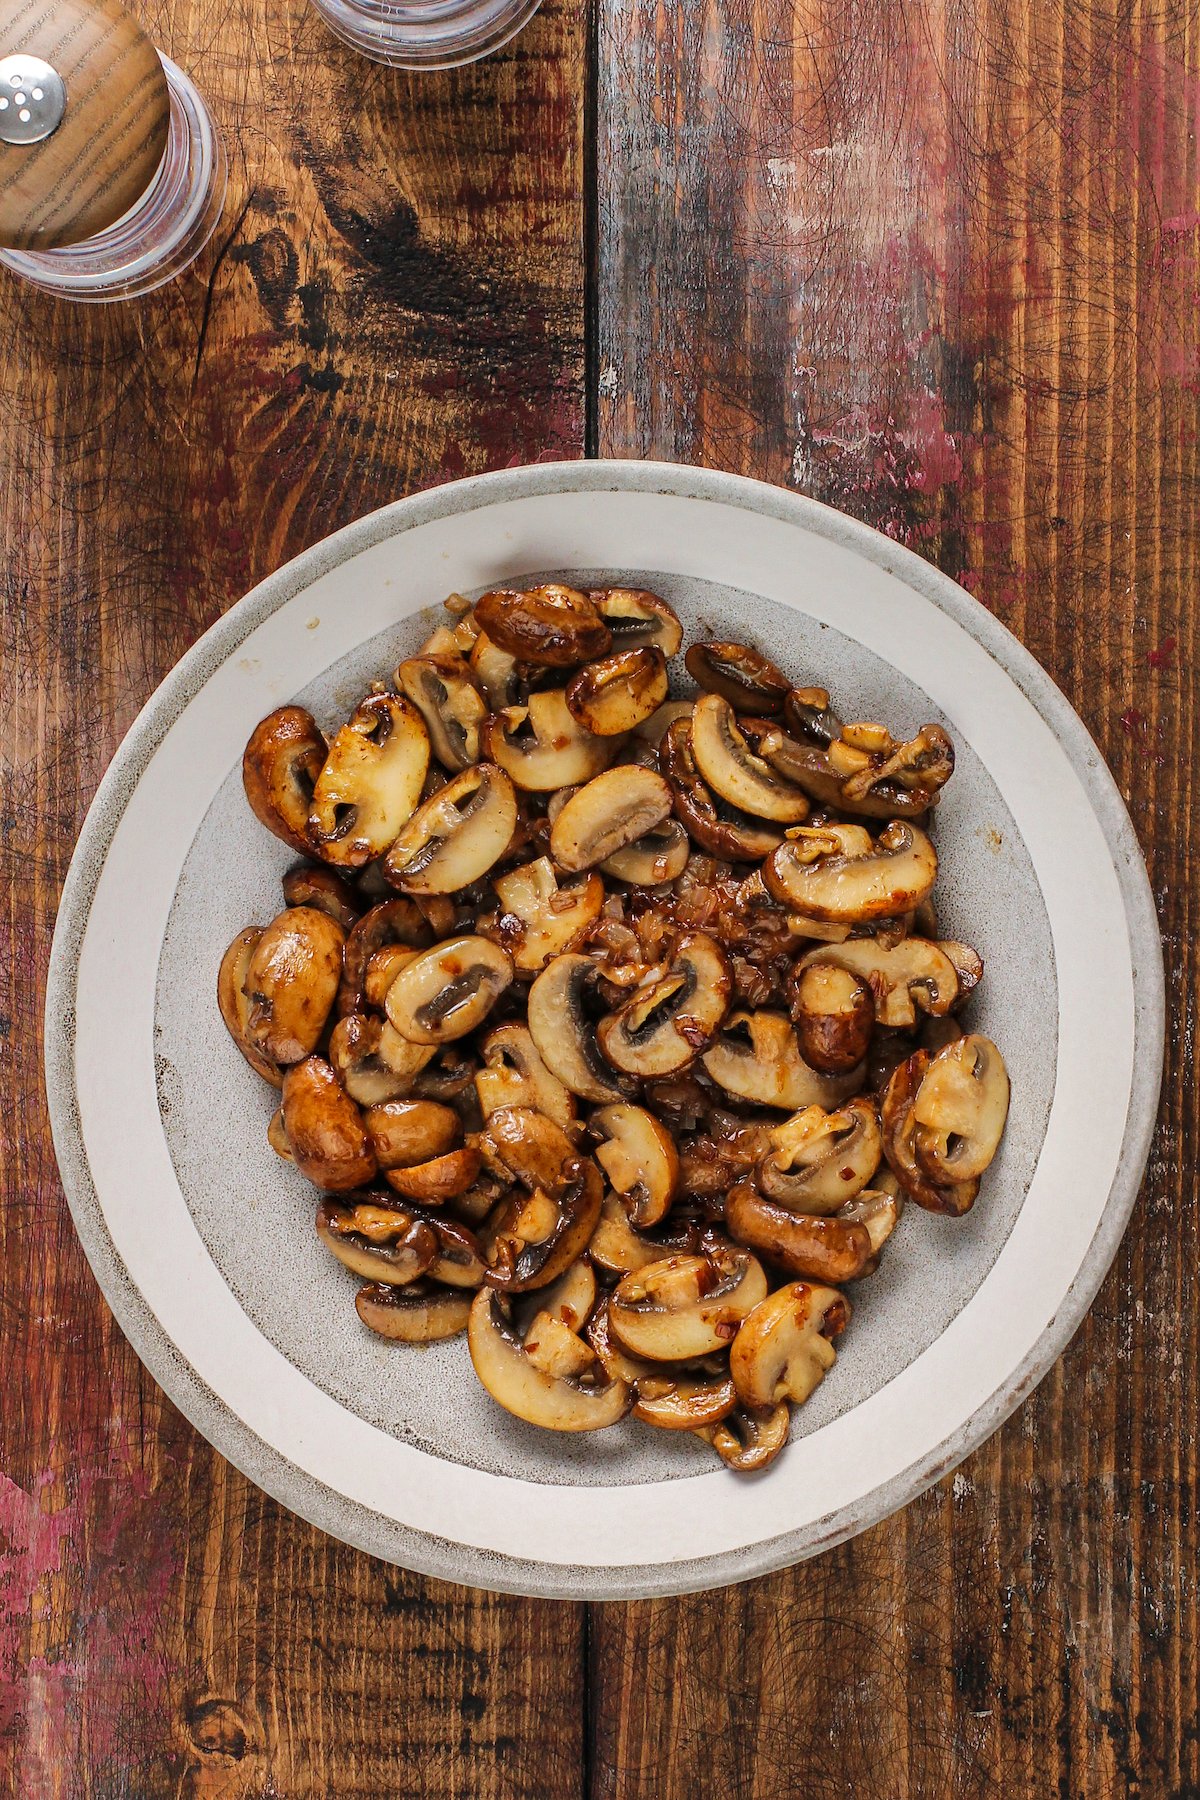 A bowl of sauteed mushrooms.